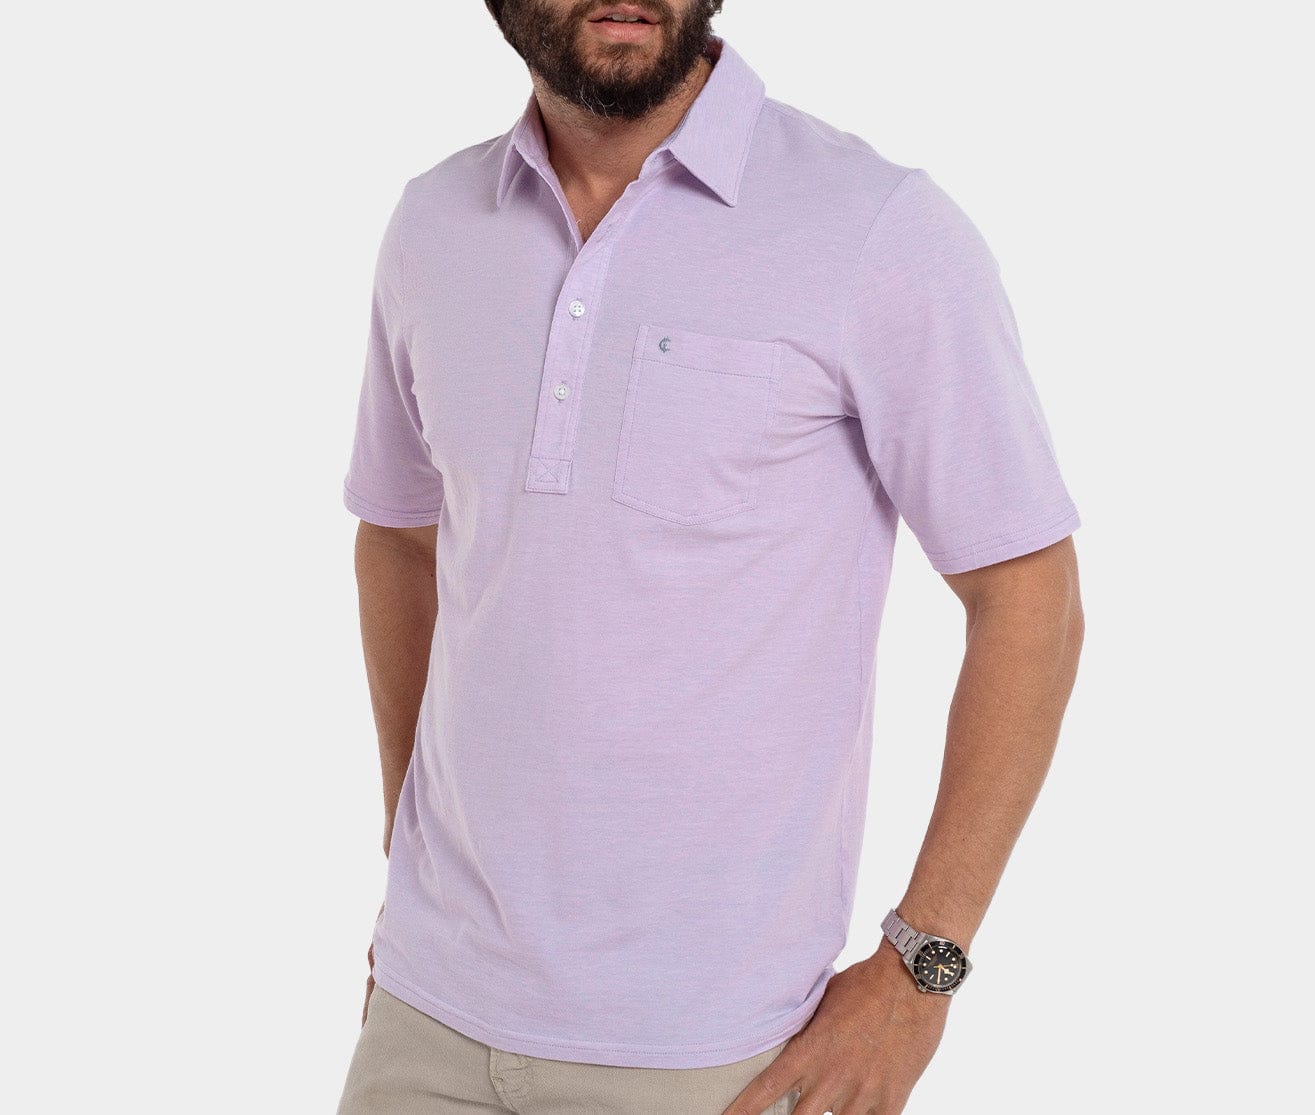 Top-Shelf Players Shirt - Lavender Microstripe